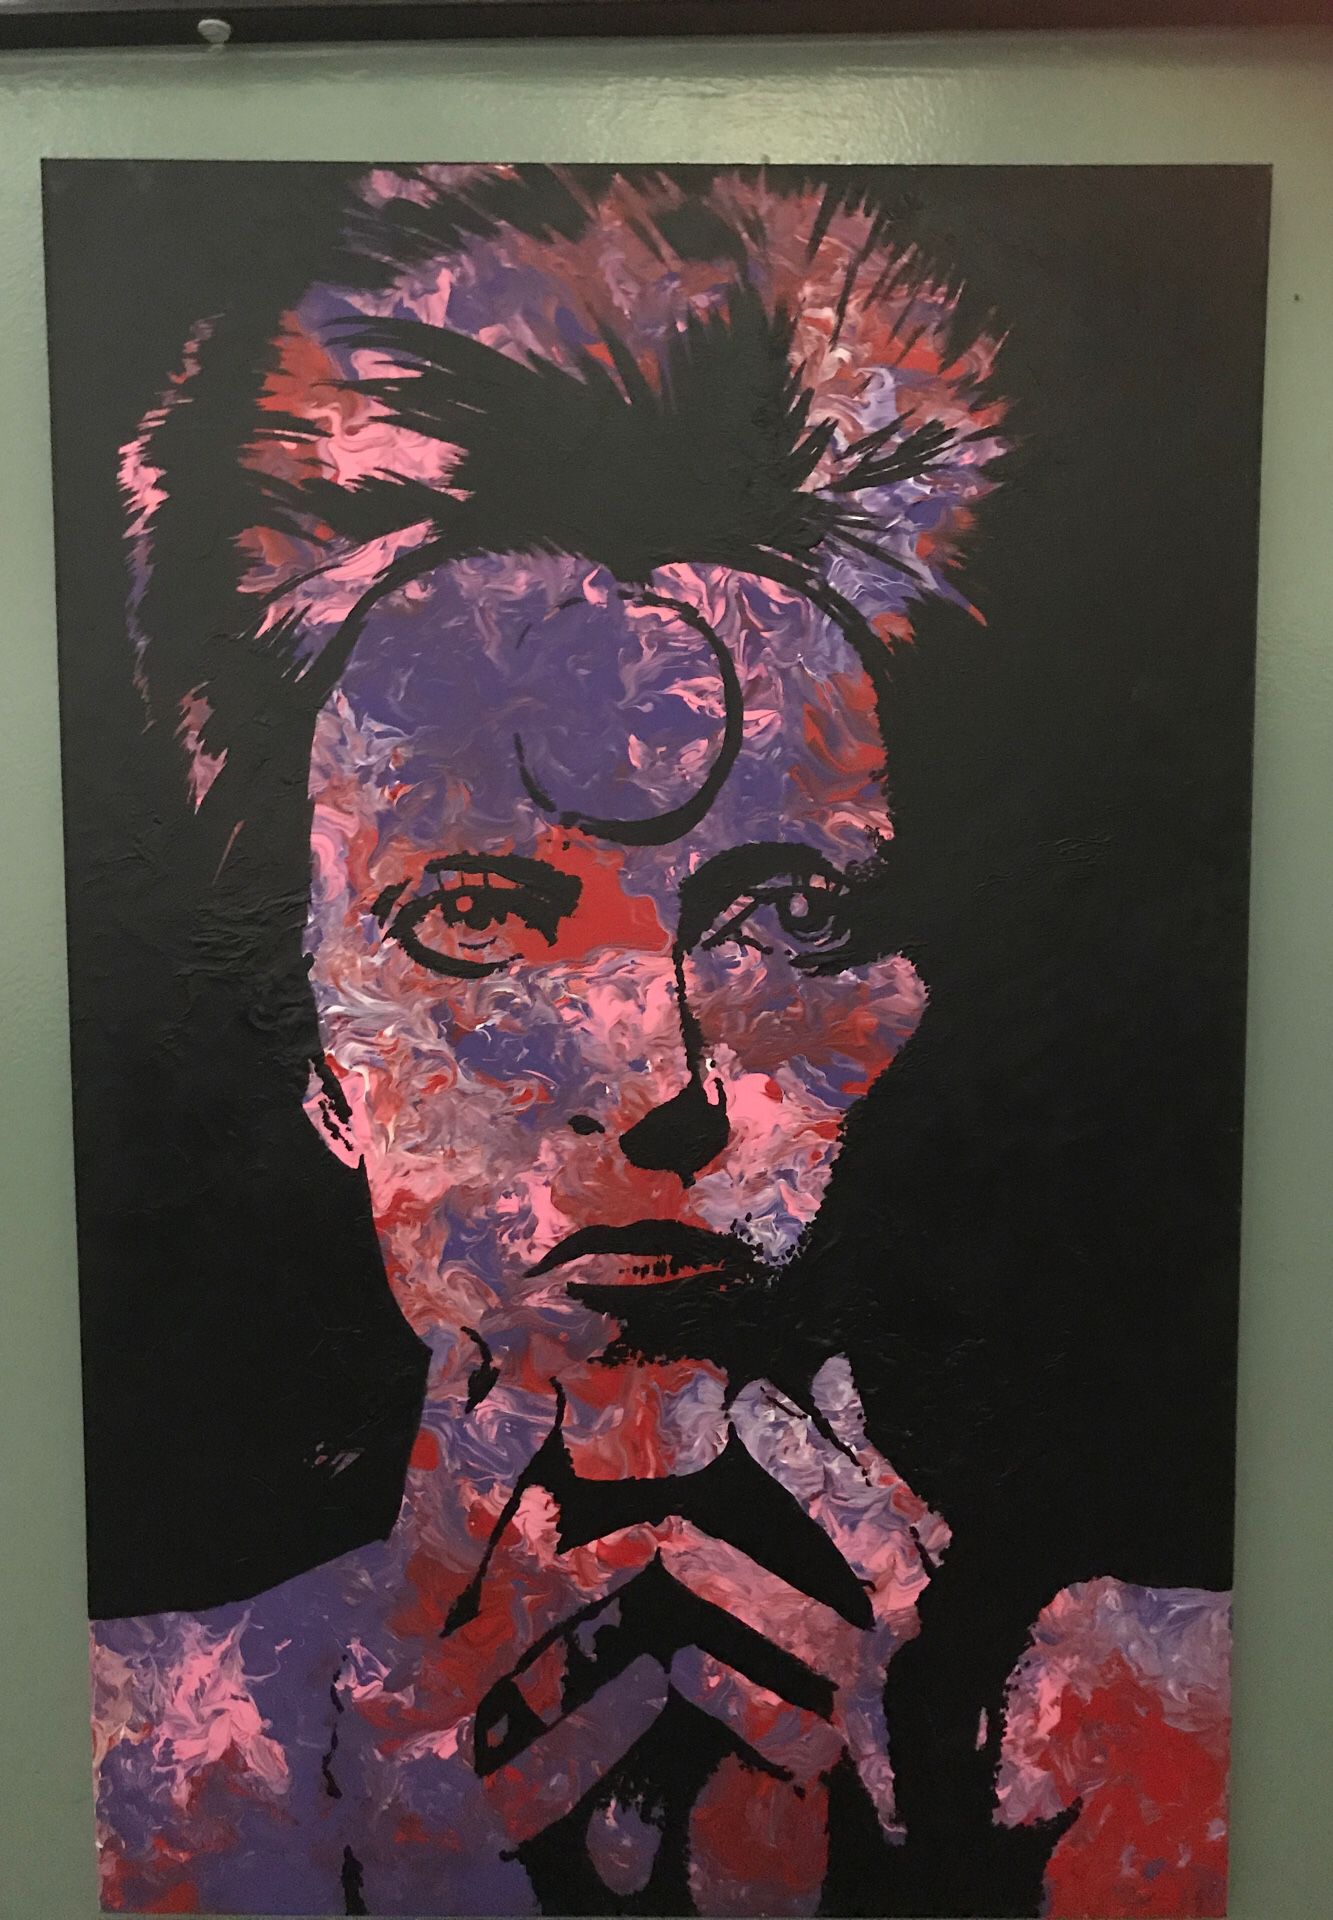 Original David Bowie large painting